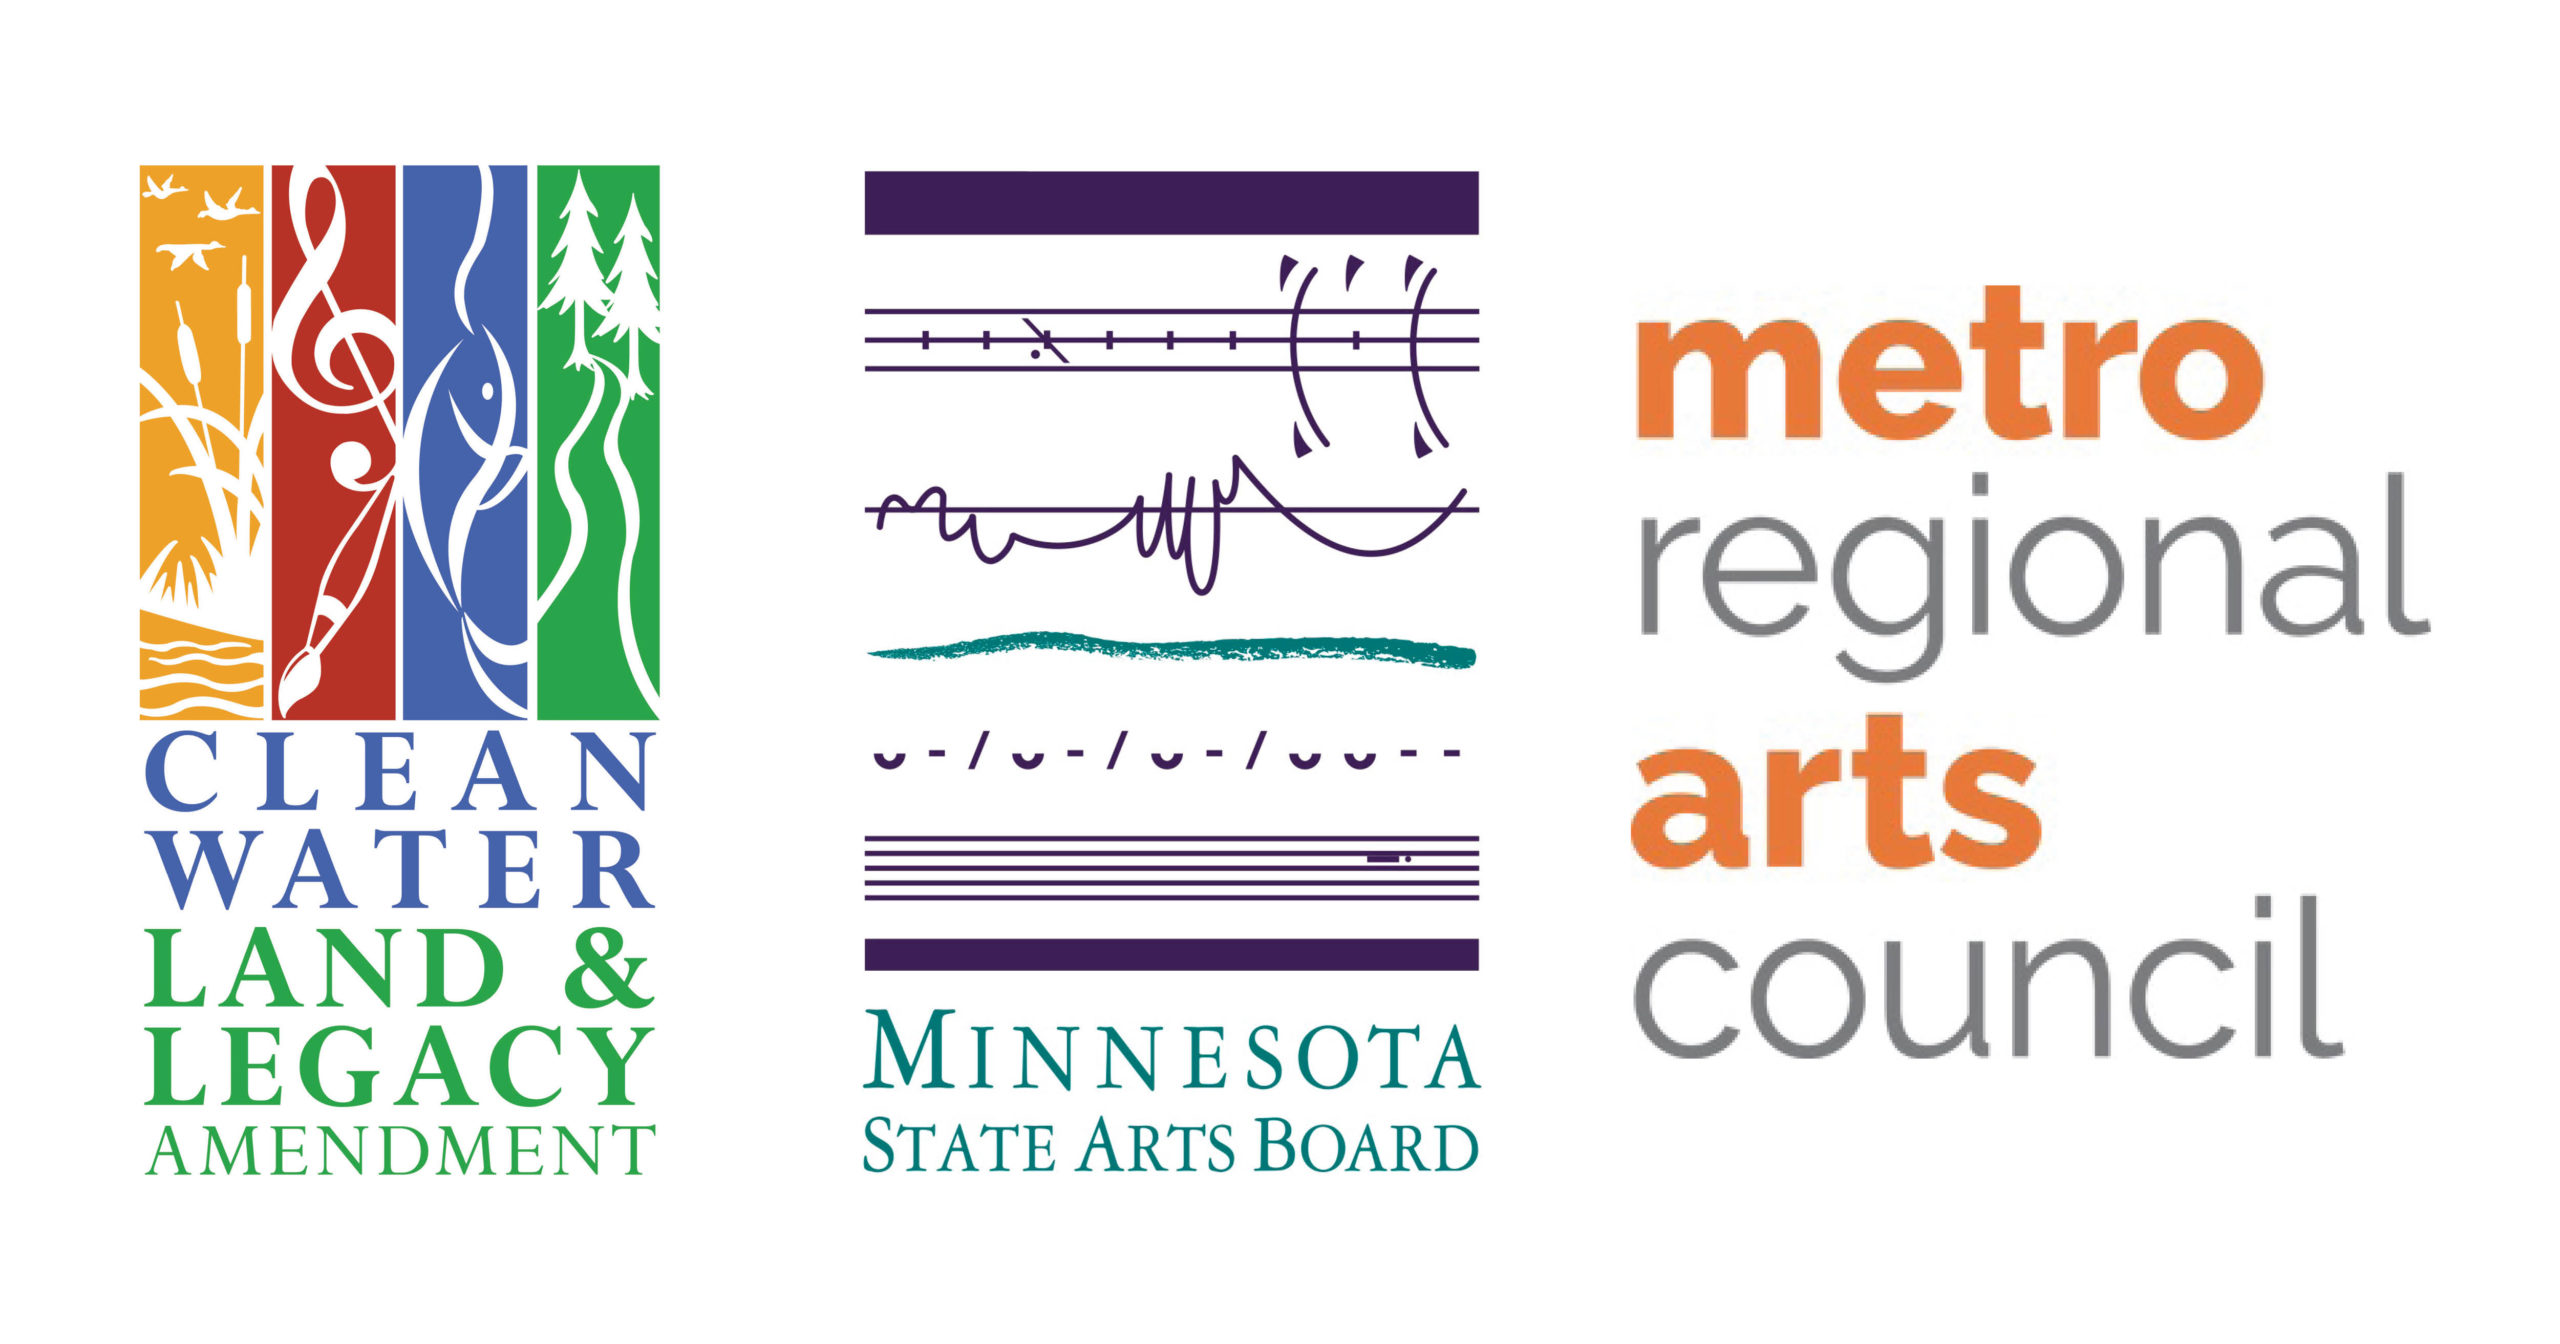 Minnesota State Arts Board logo, Metropolitan Regional Arts Council logo, and Clean Water, Land & Legacy Amendment Logo